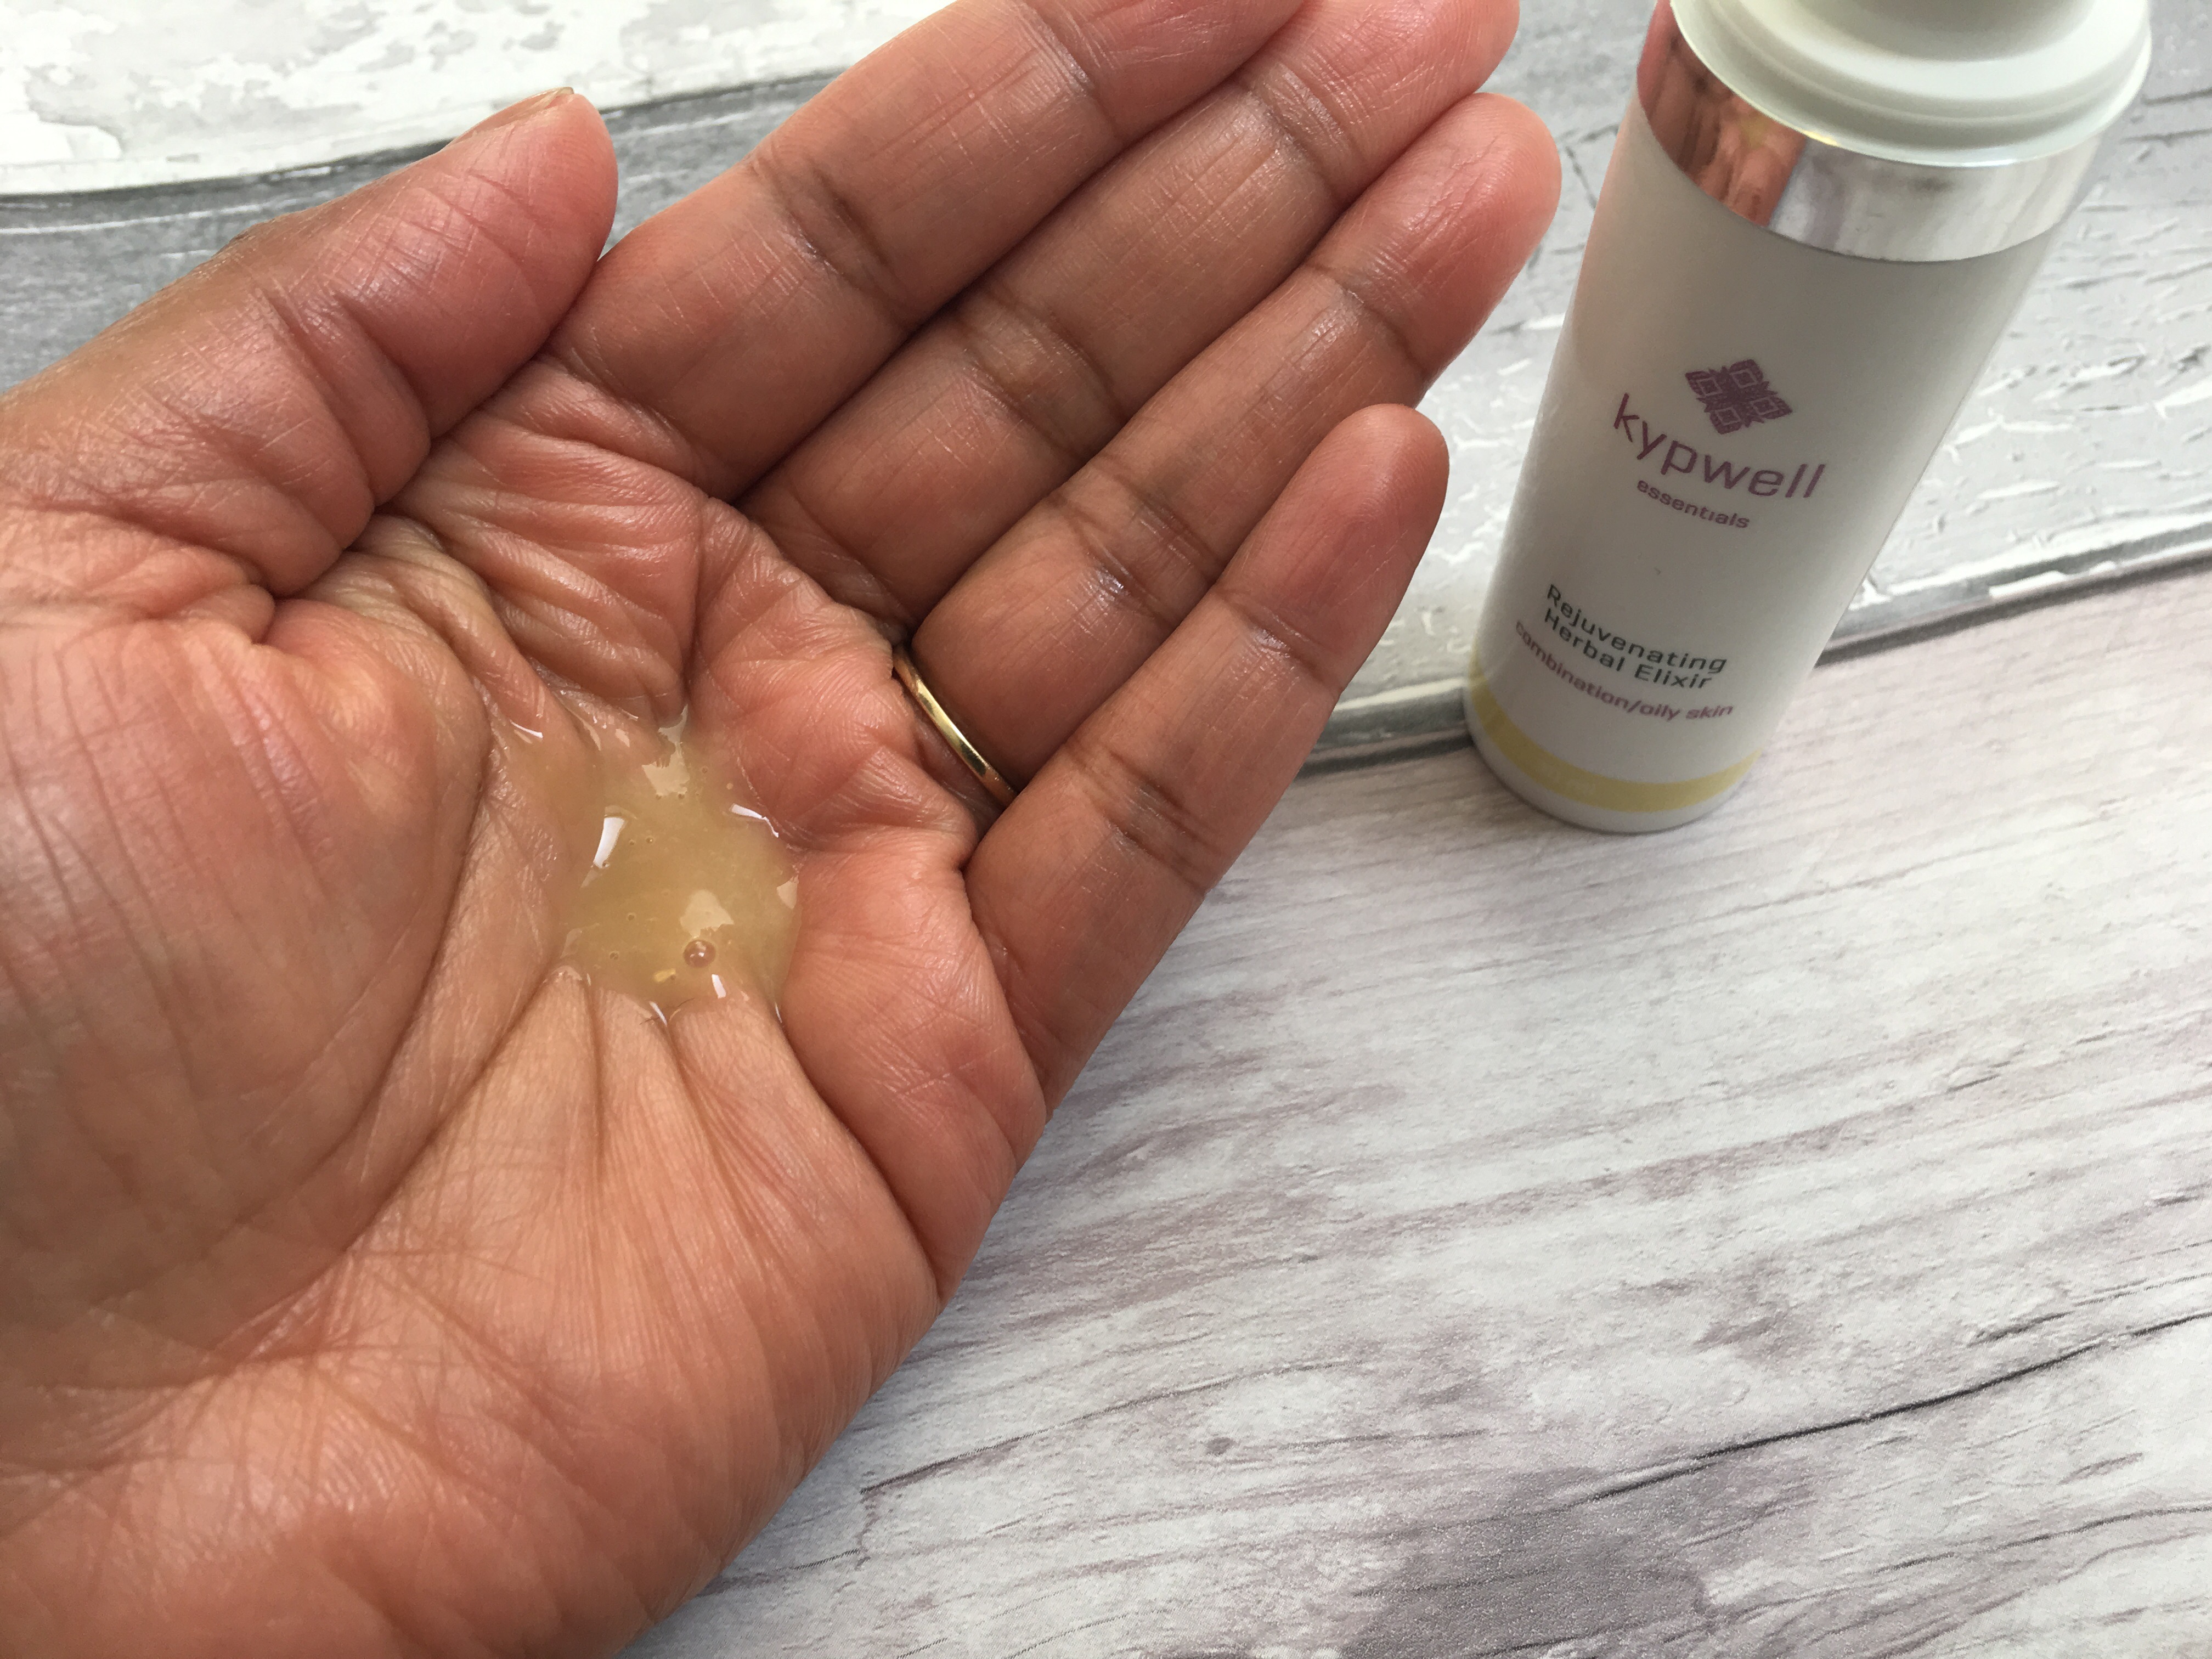 Kypwell Rejuvenating Herbal Elixir for combination/oily skin